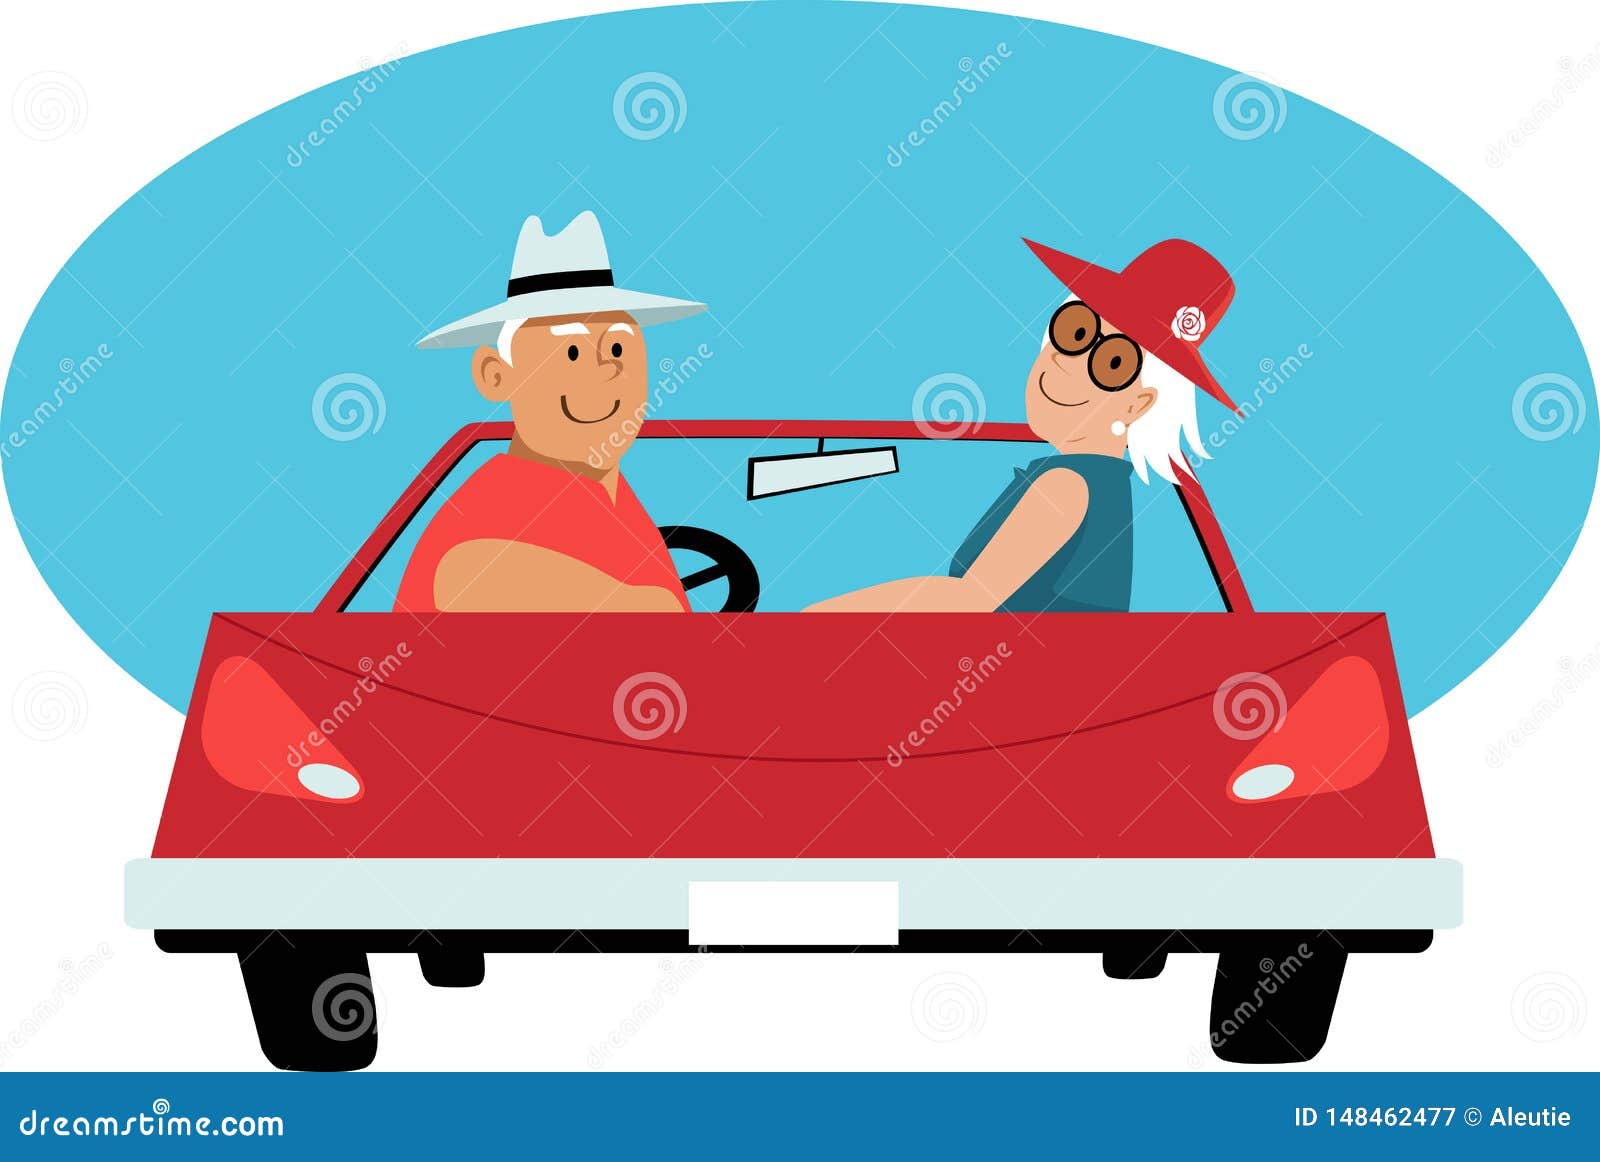 seniors on a road trip